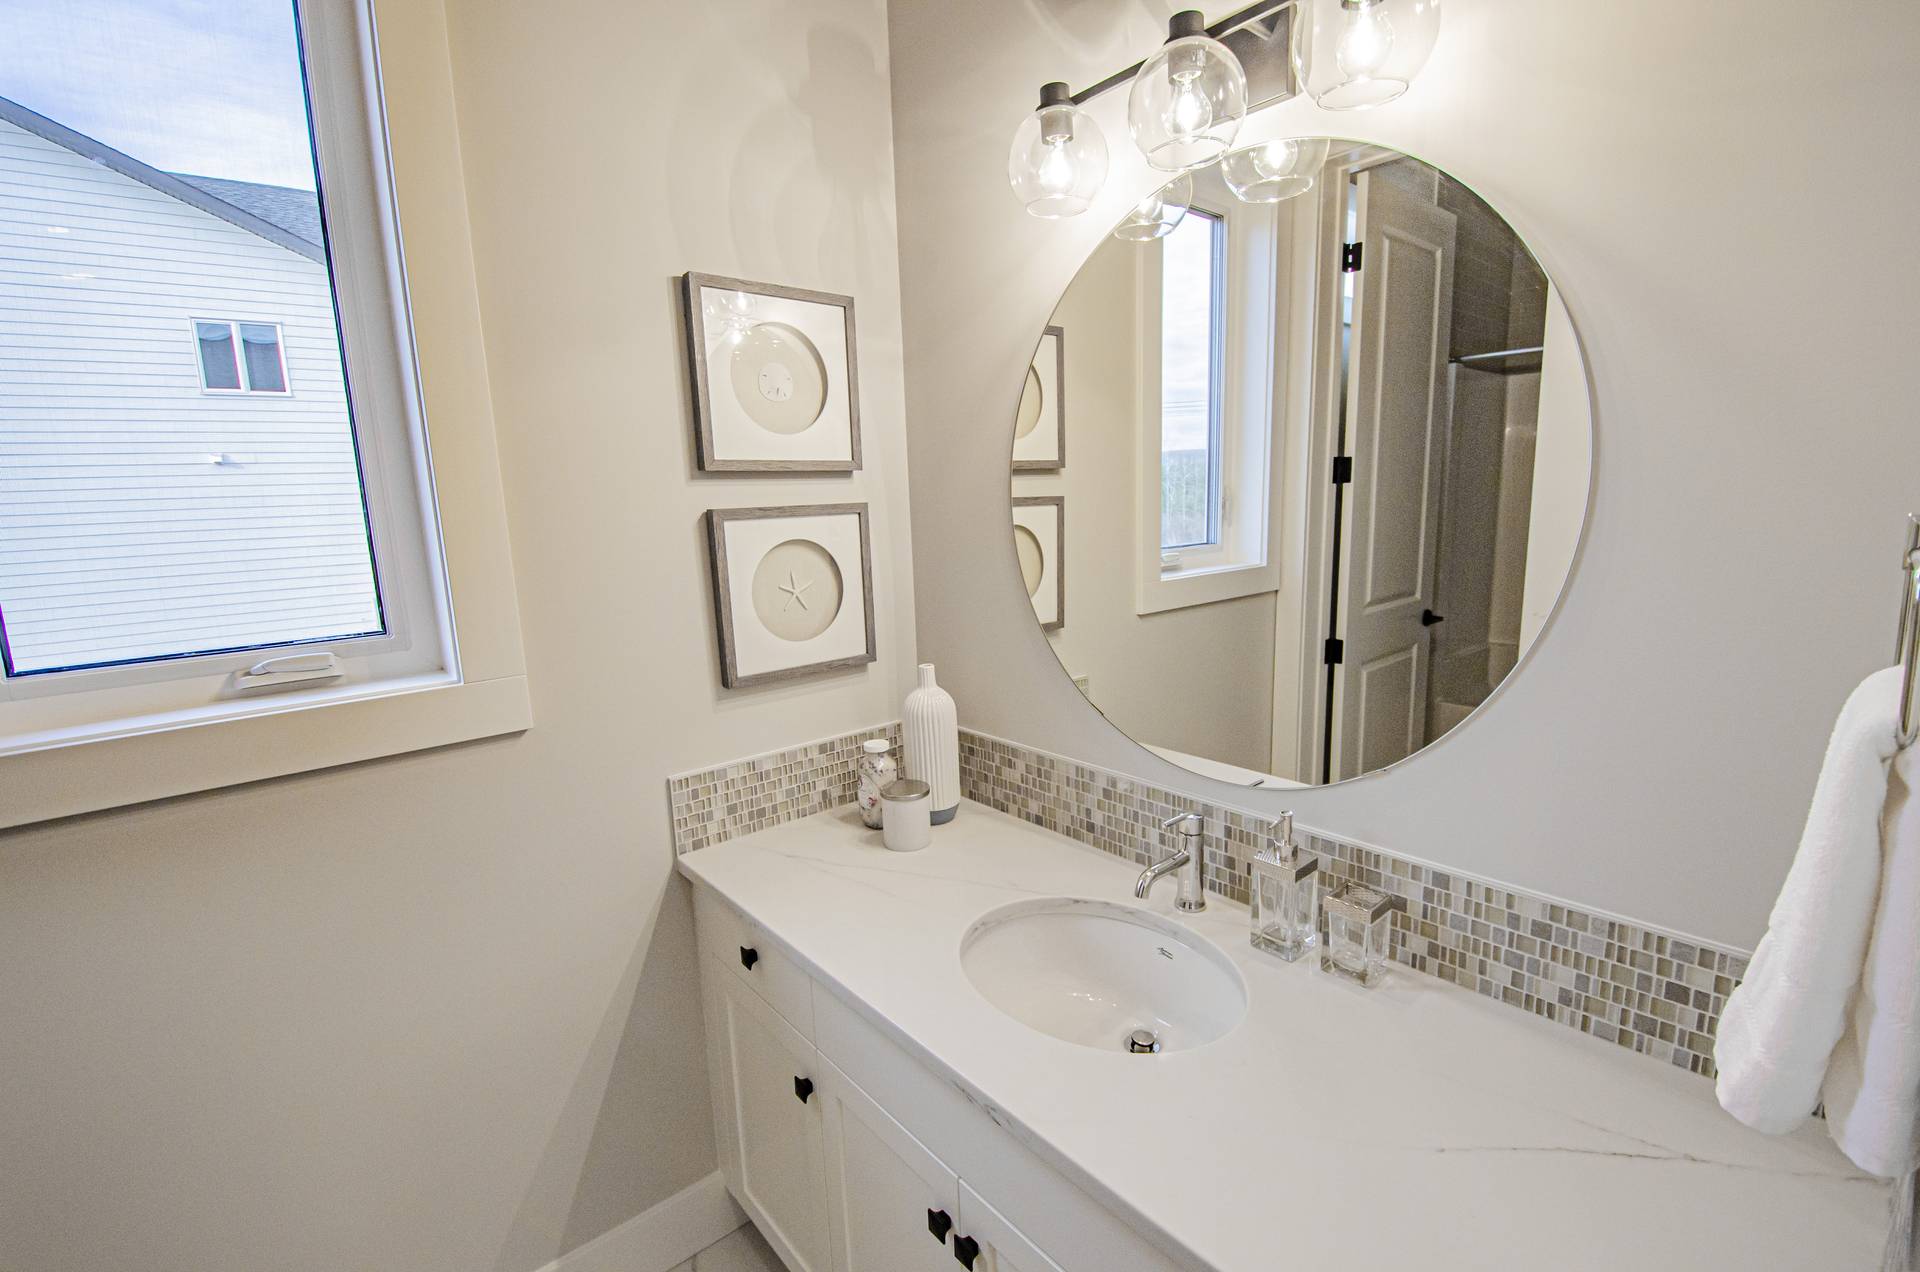 Bathroom renovations in Calgary